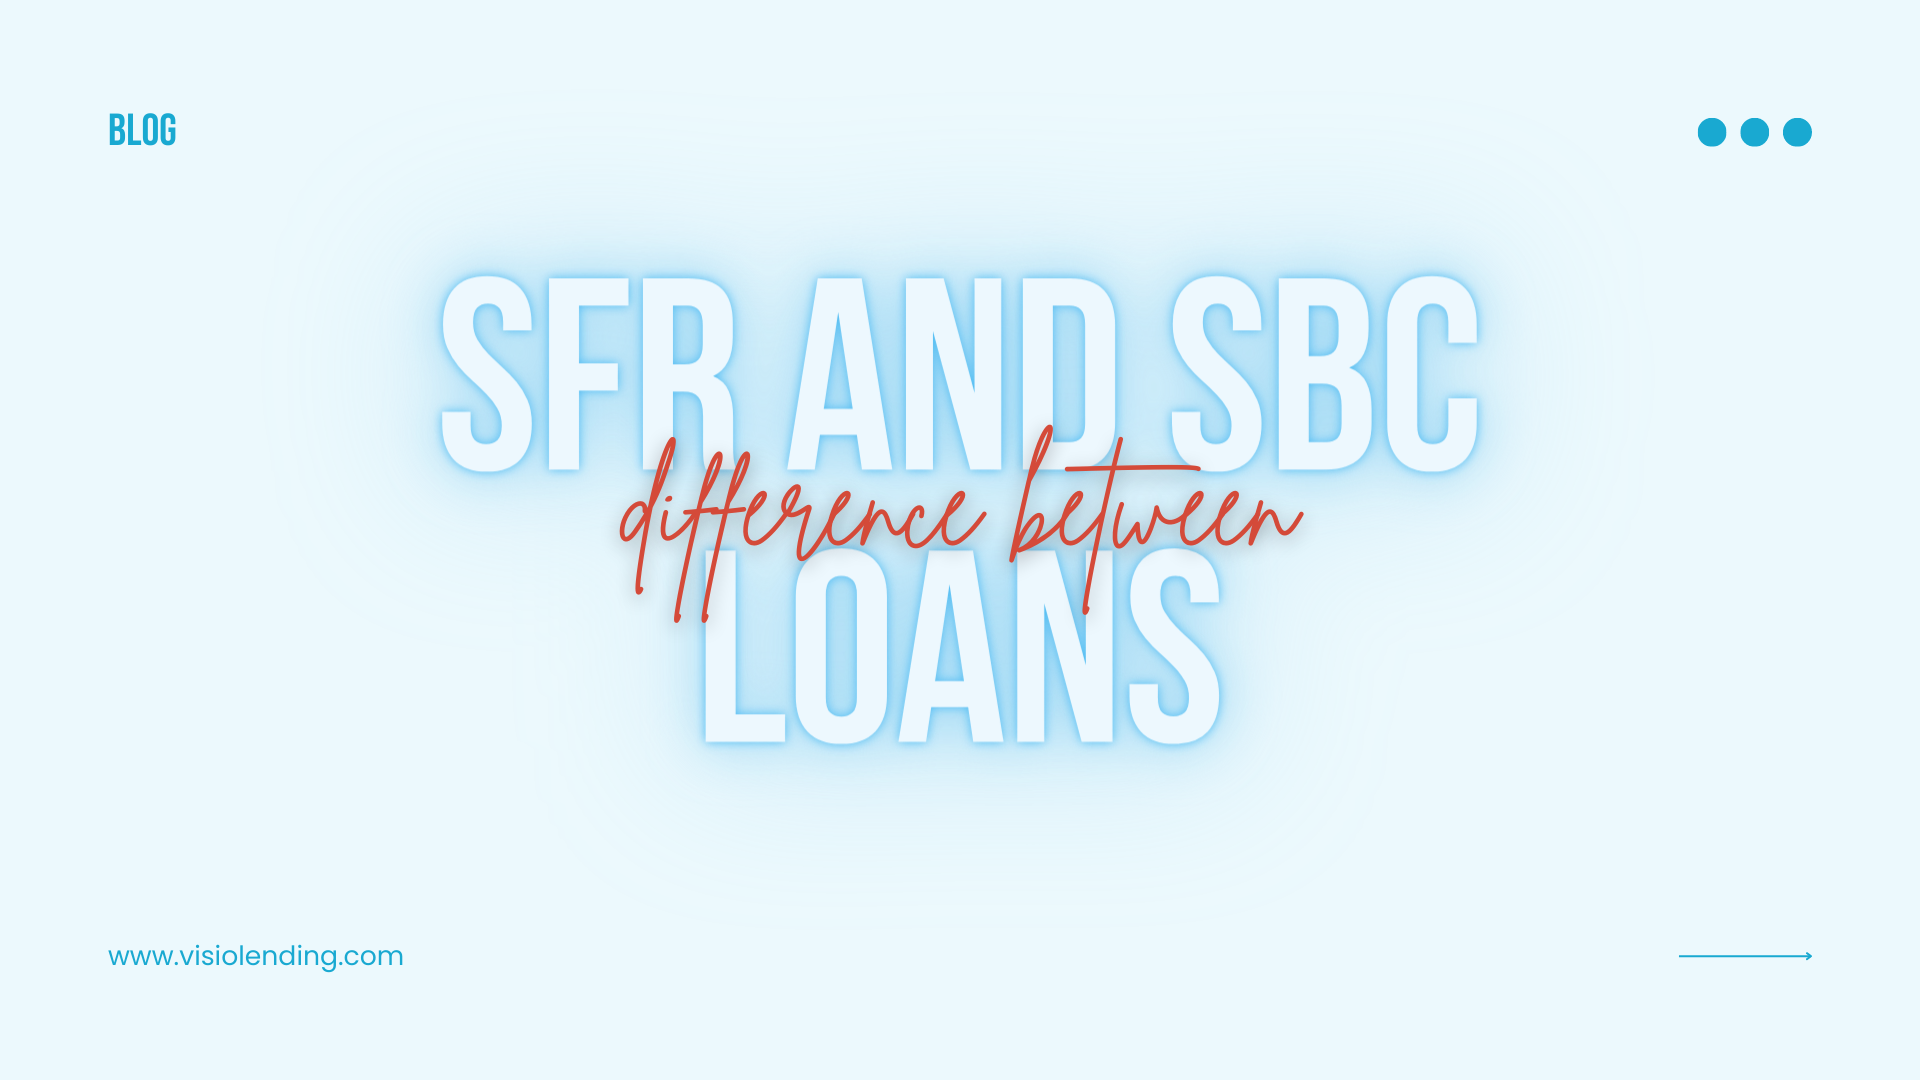 comparing sfr and sbc